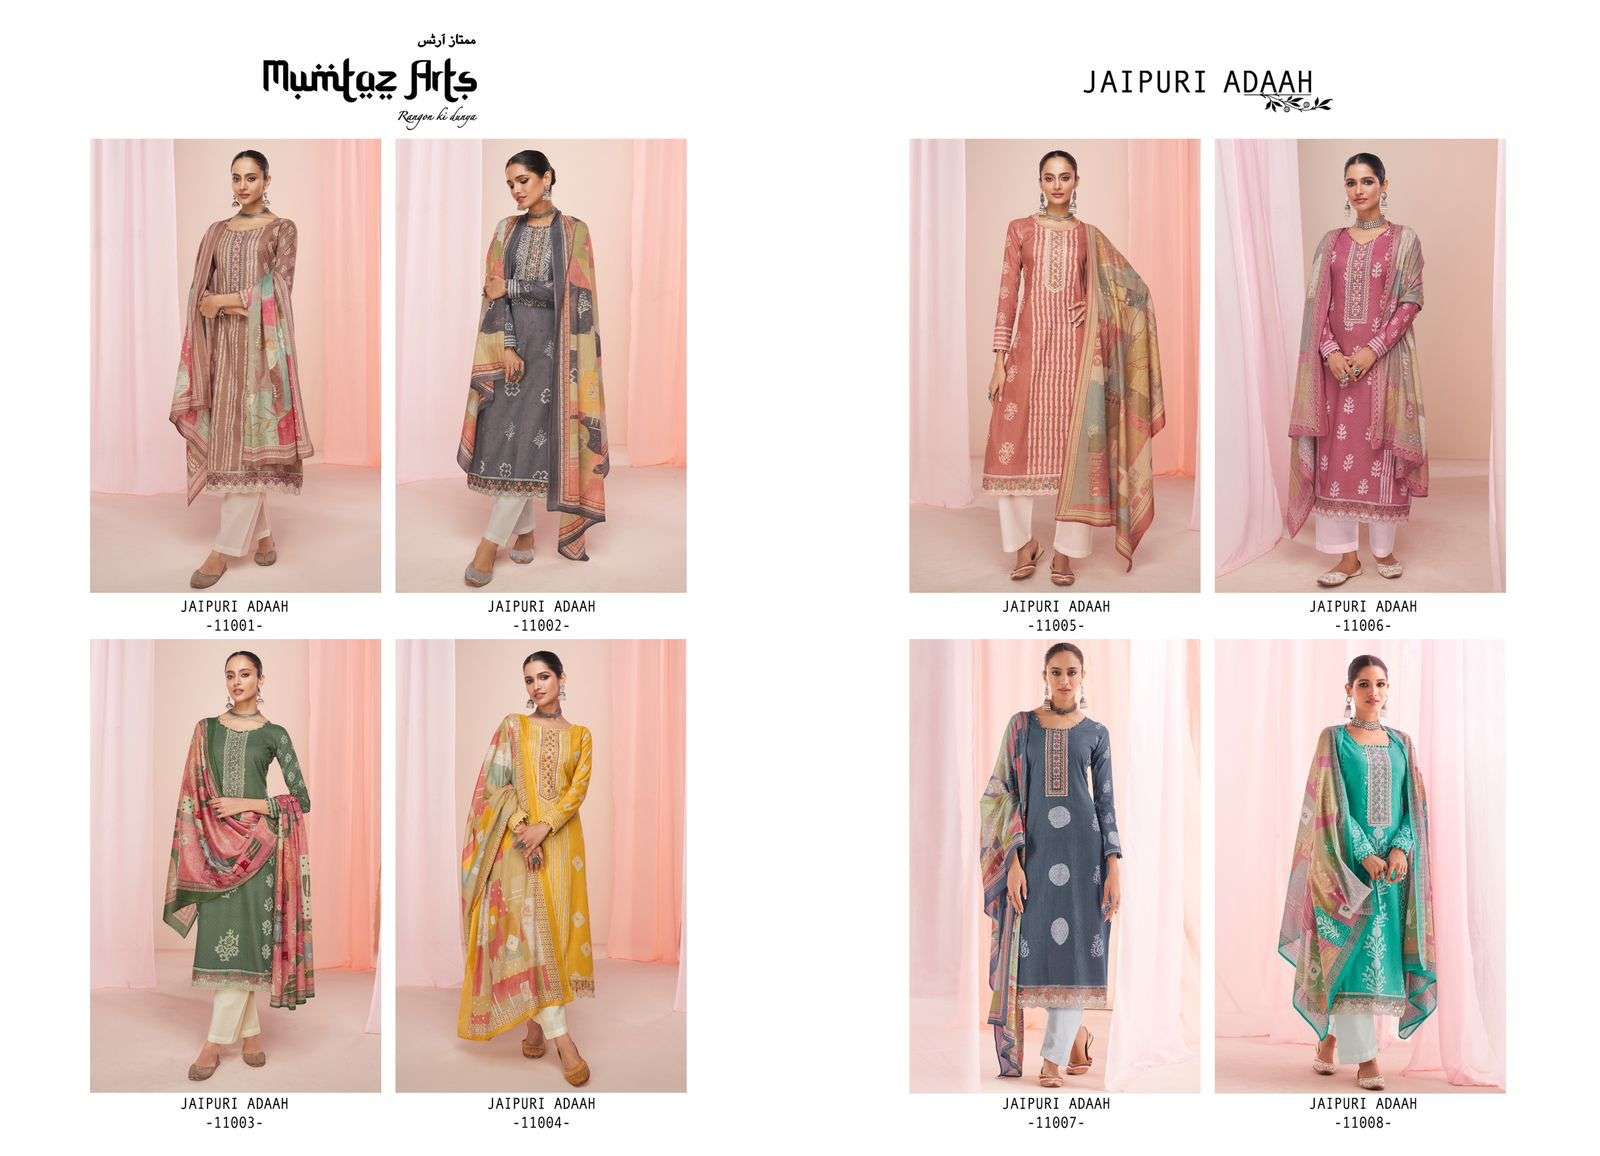 mumtaz arts jaipuri adaah 11001-11008 series stylish designer salwar kameez catalogue manufacturer surat 